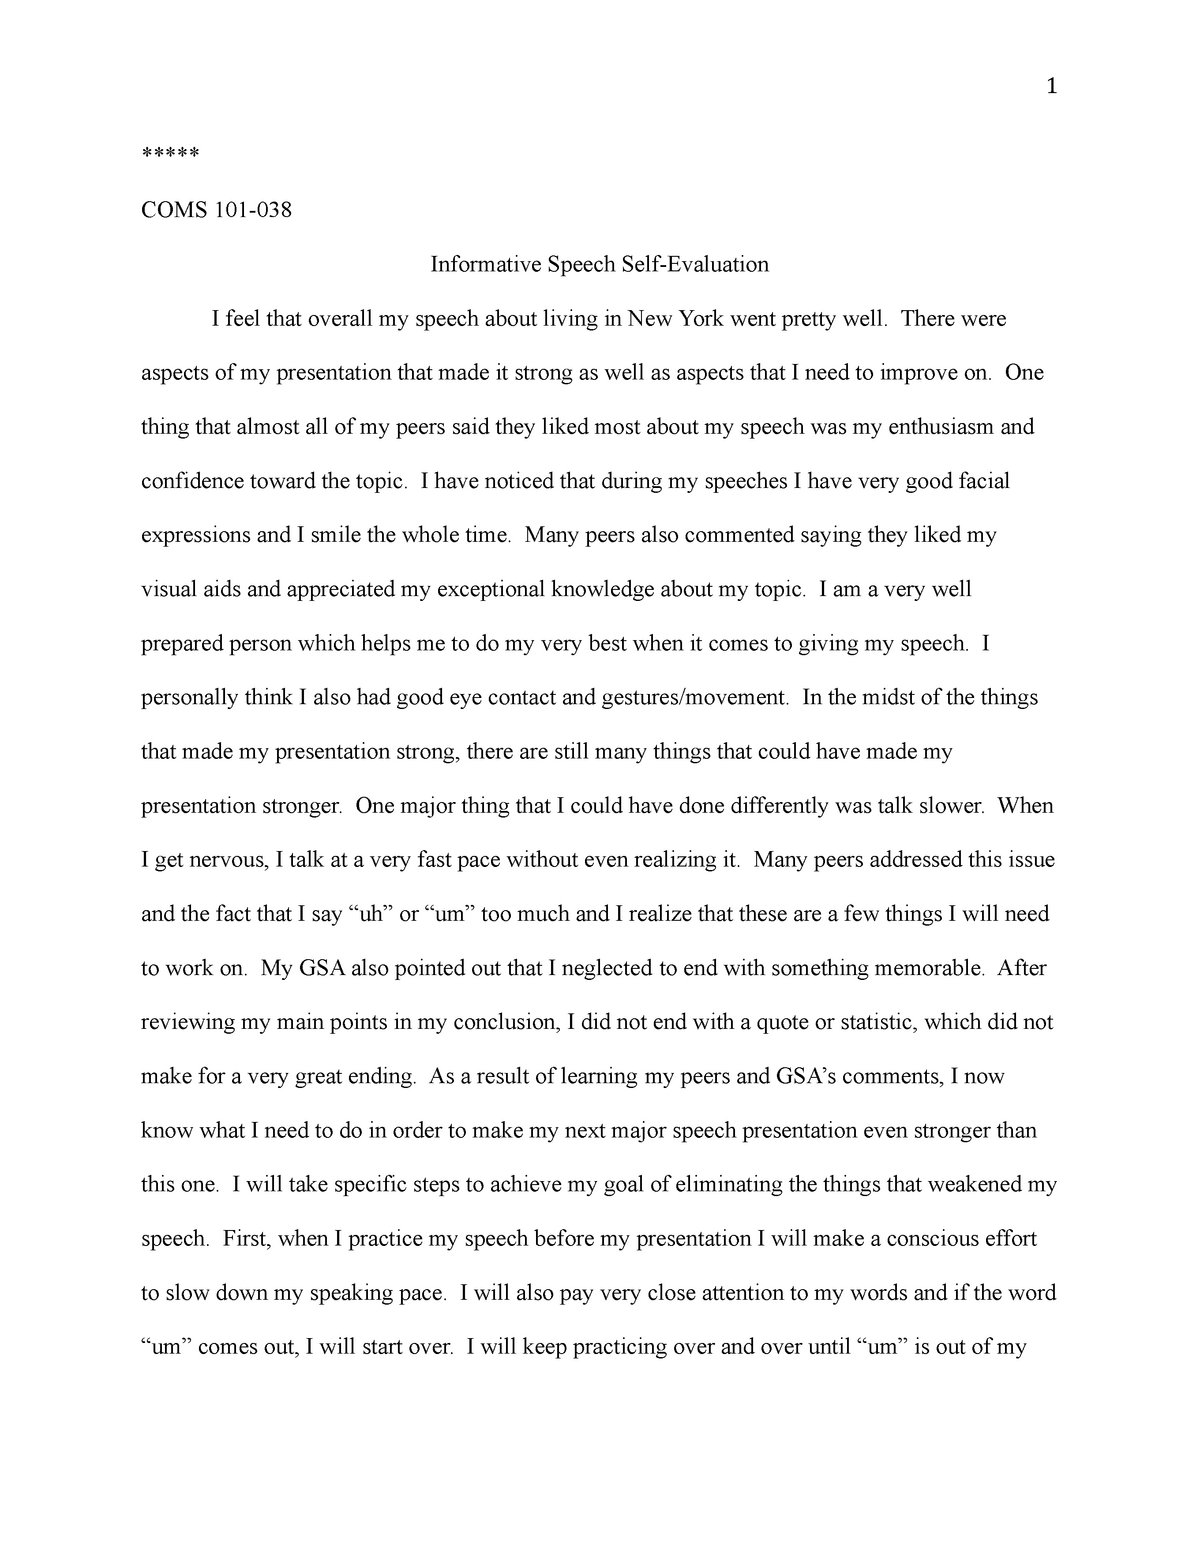 speech self evaluation essay